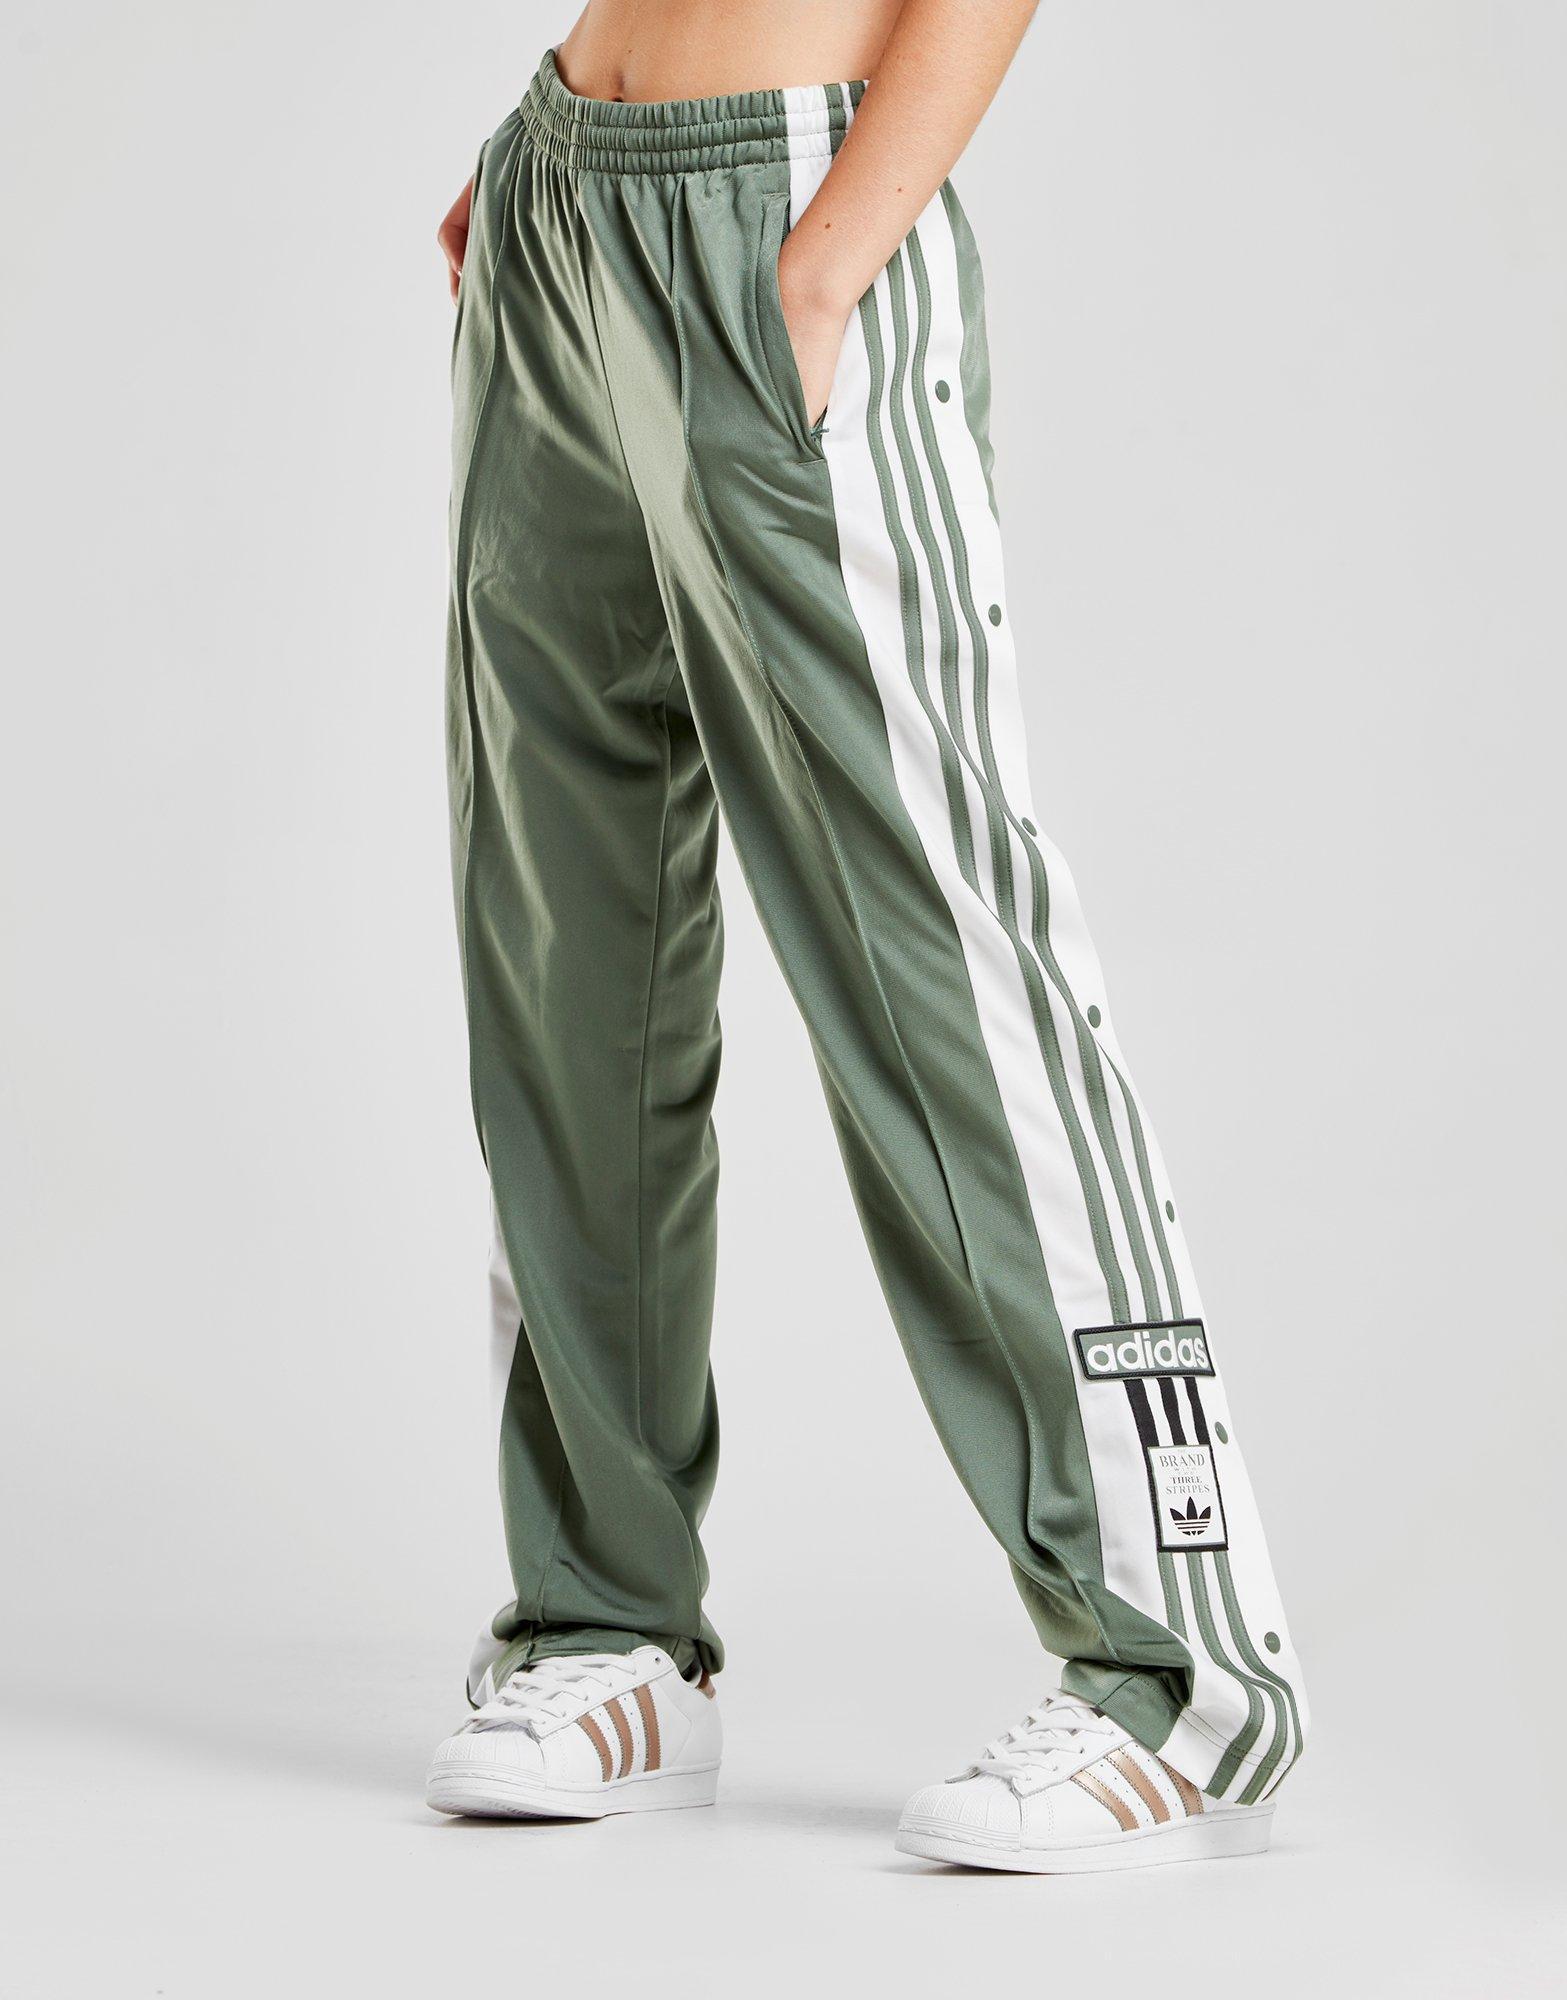 adidas Originals Synthetic Adibreak Popper Pants in Green/White (Green) -  Lyst